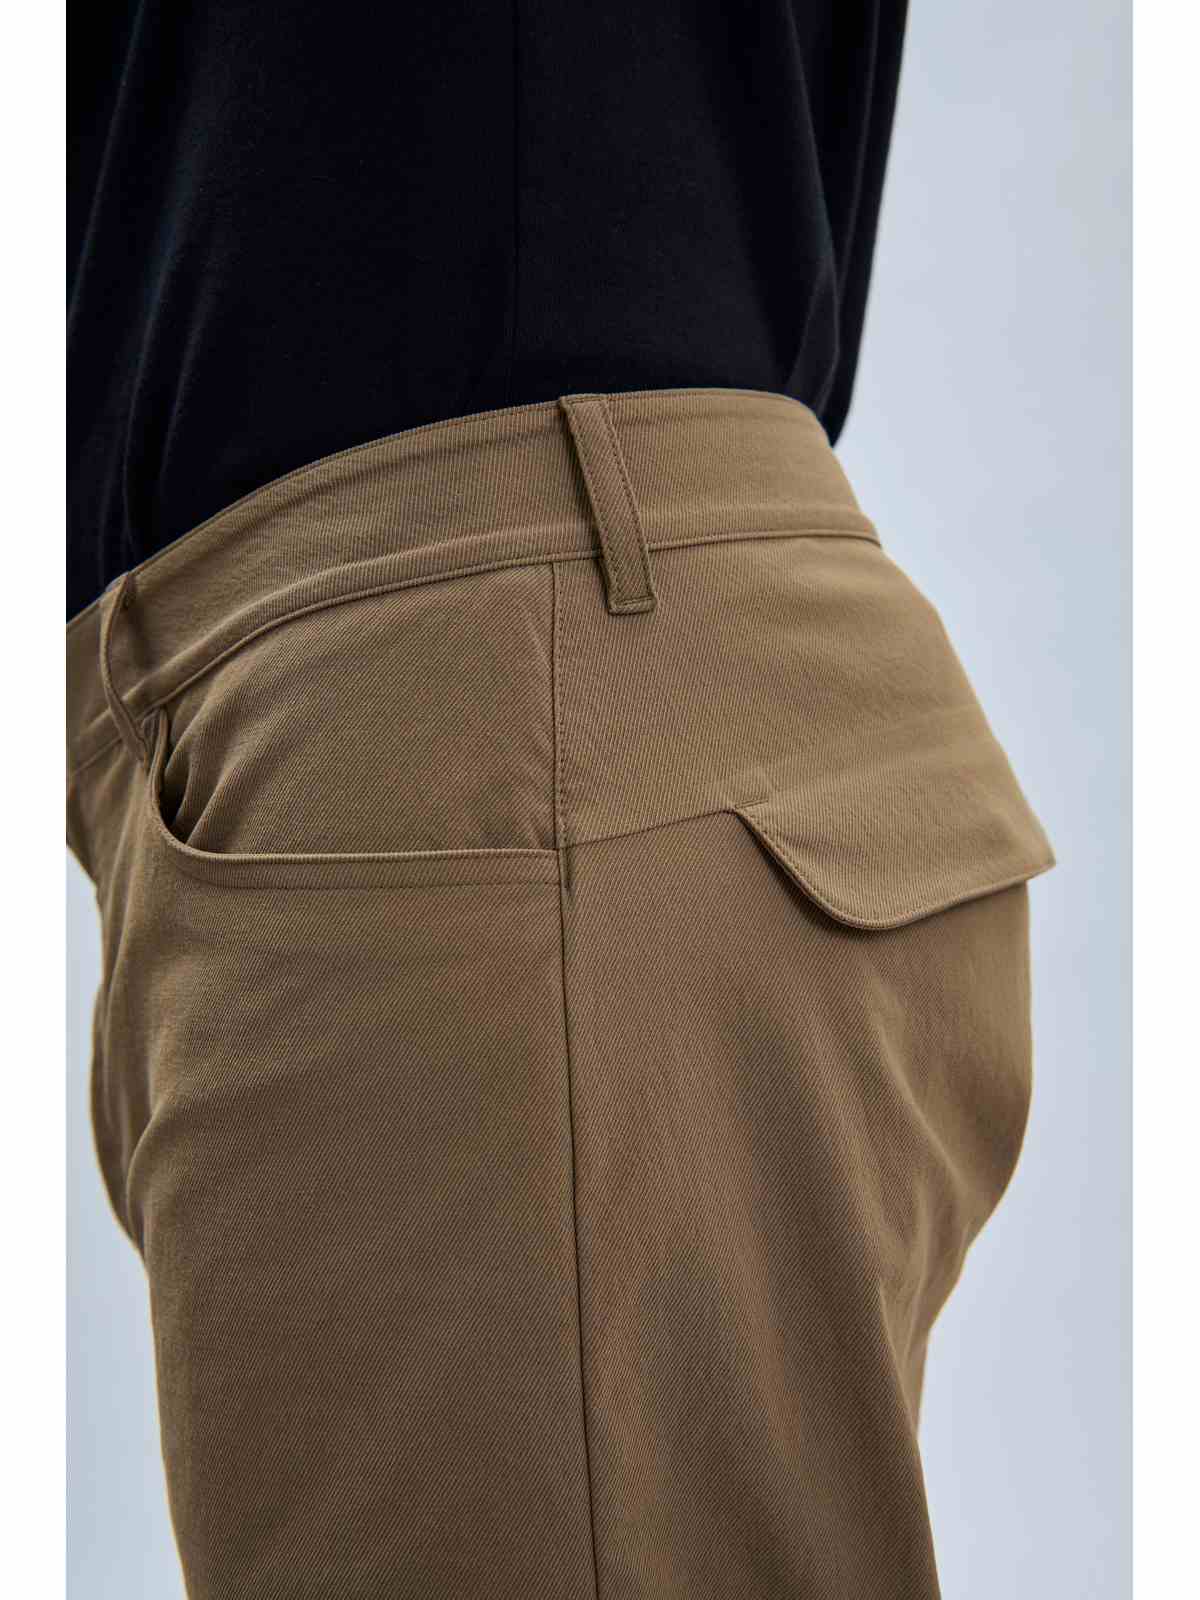 Spodenki POC M's Essential Casual Shorts - Jasper Brown